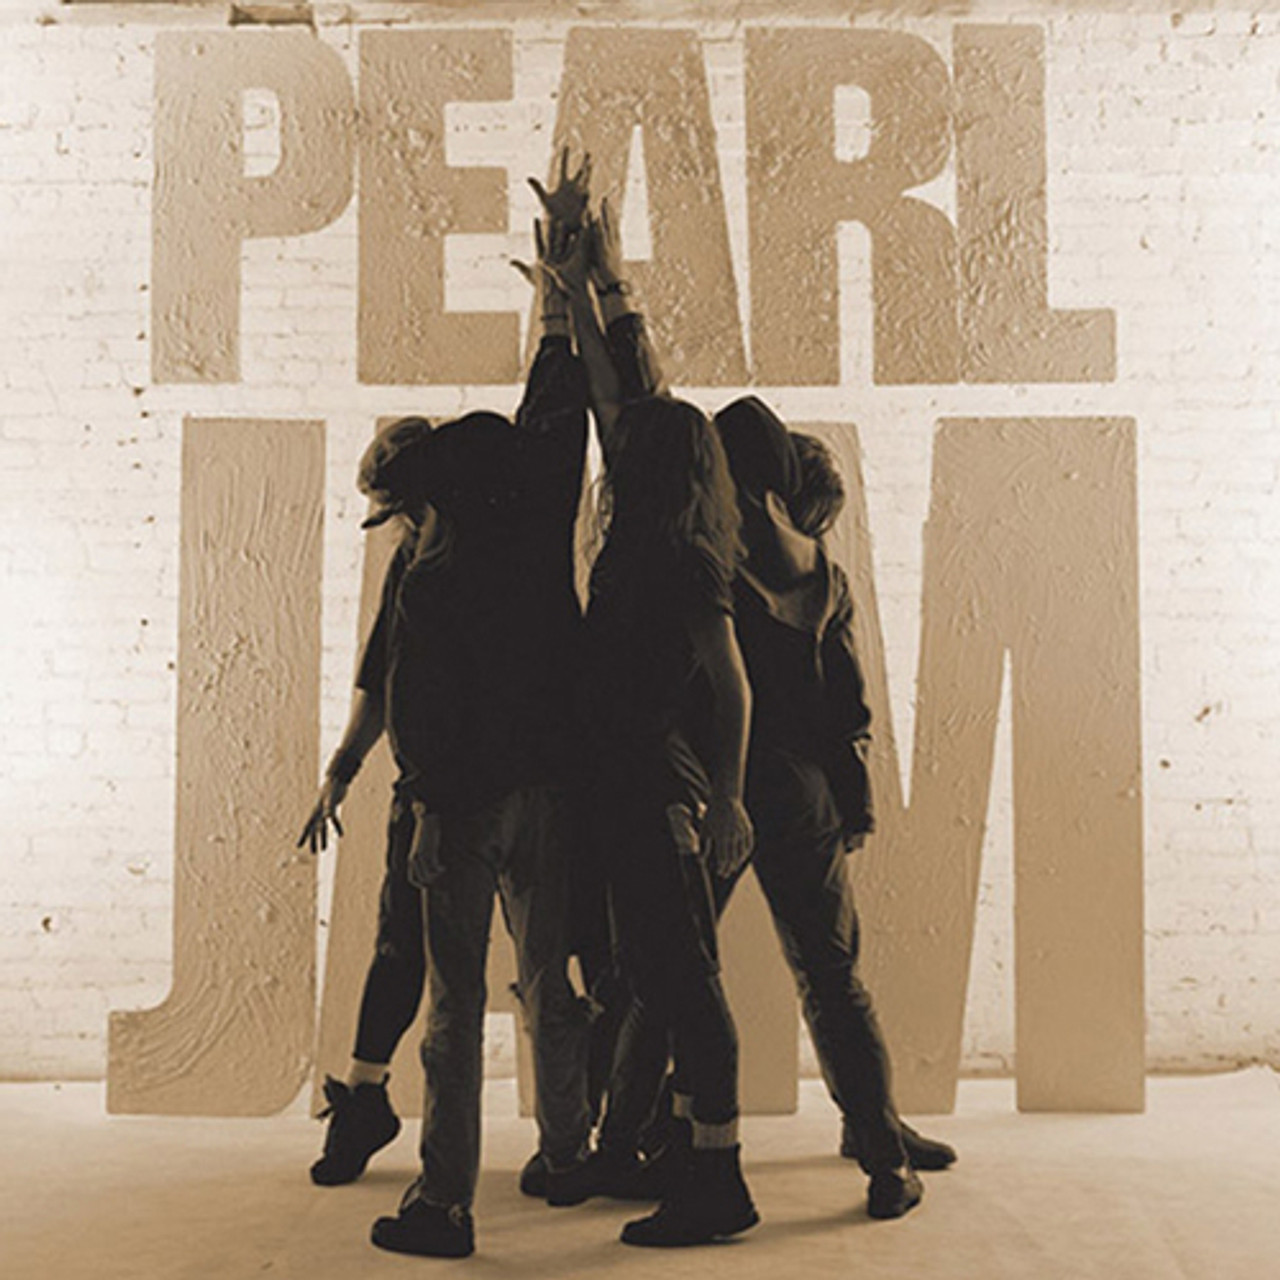 Pearl Jam - Ten (Vinyl 2LP) * * * - Music Direct